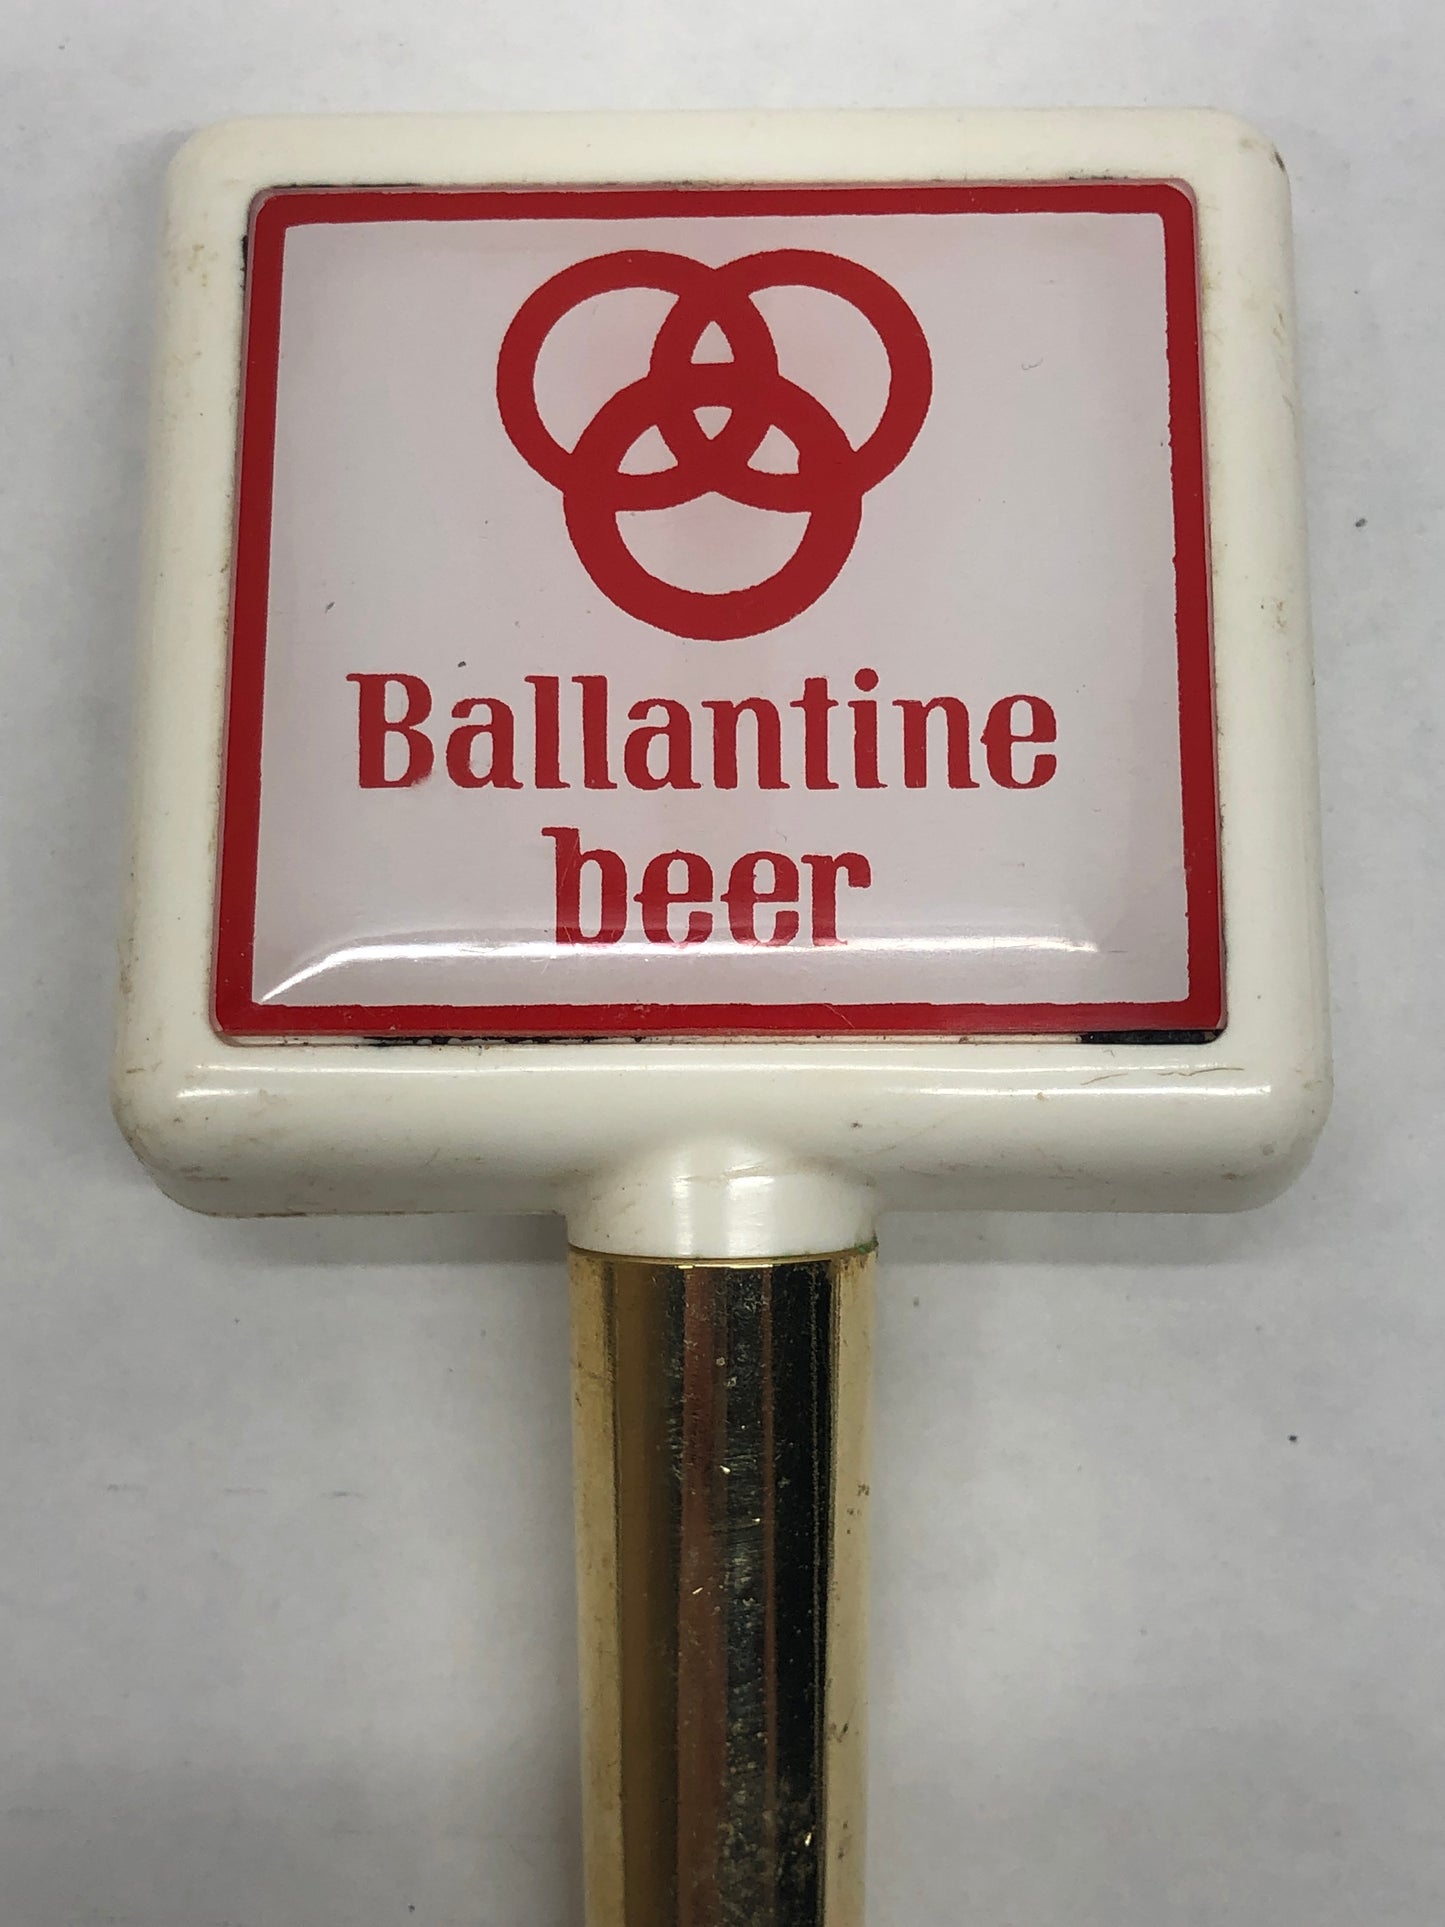 Ballantine Beer Tap Knob-Plastic, Gold Stem